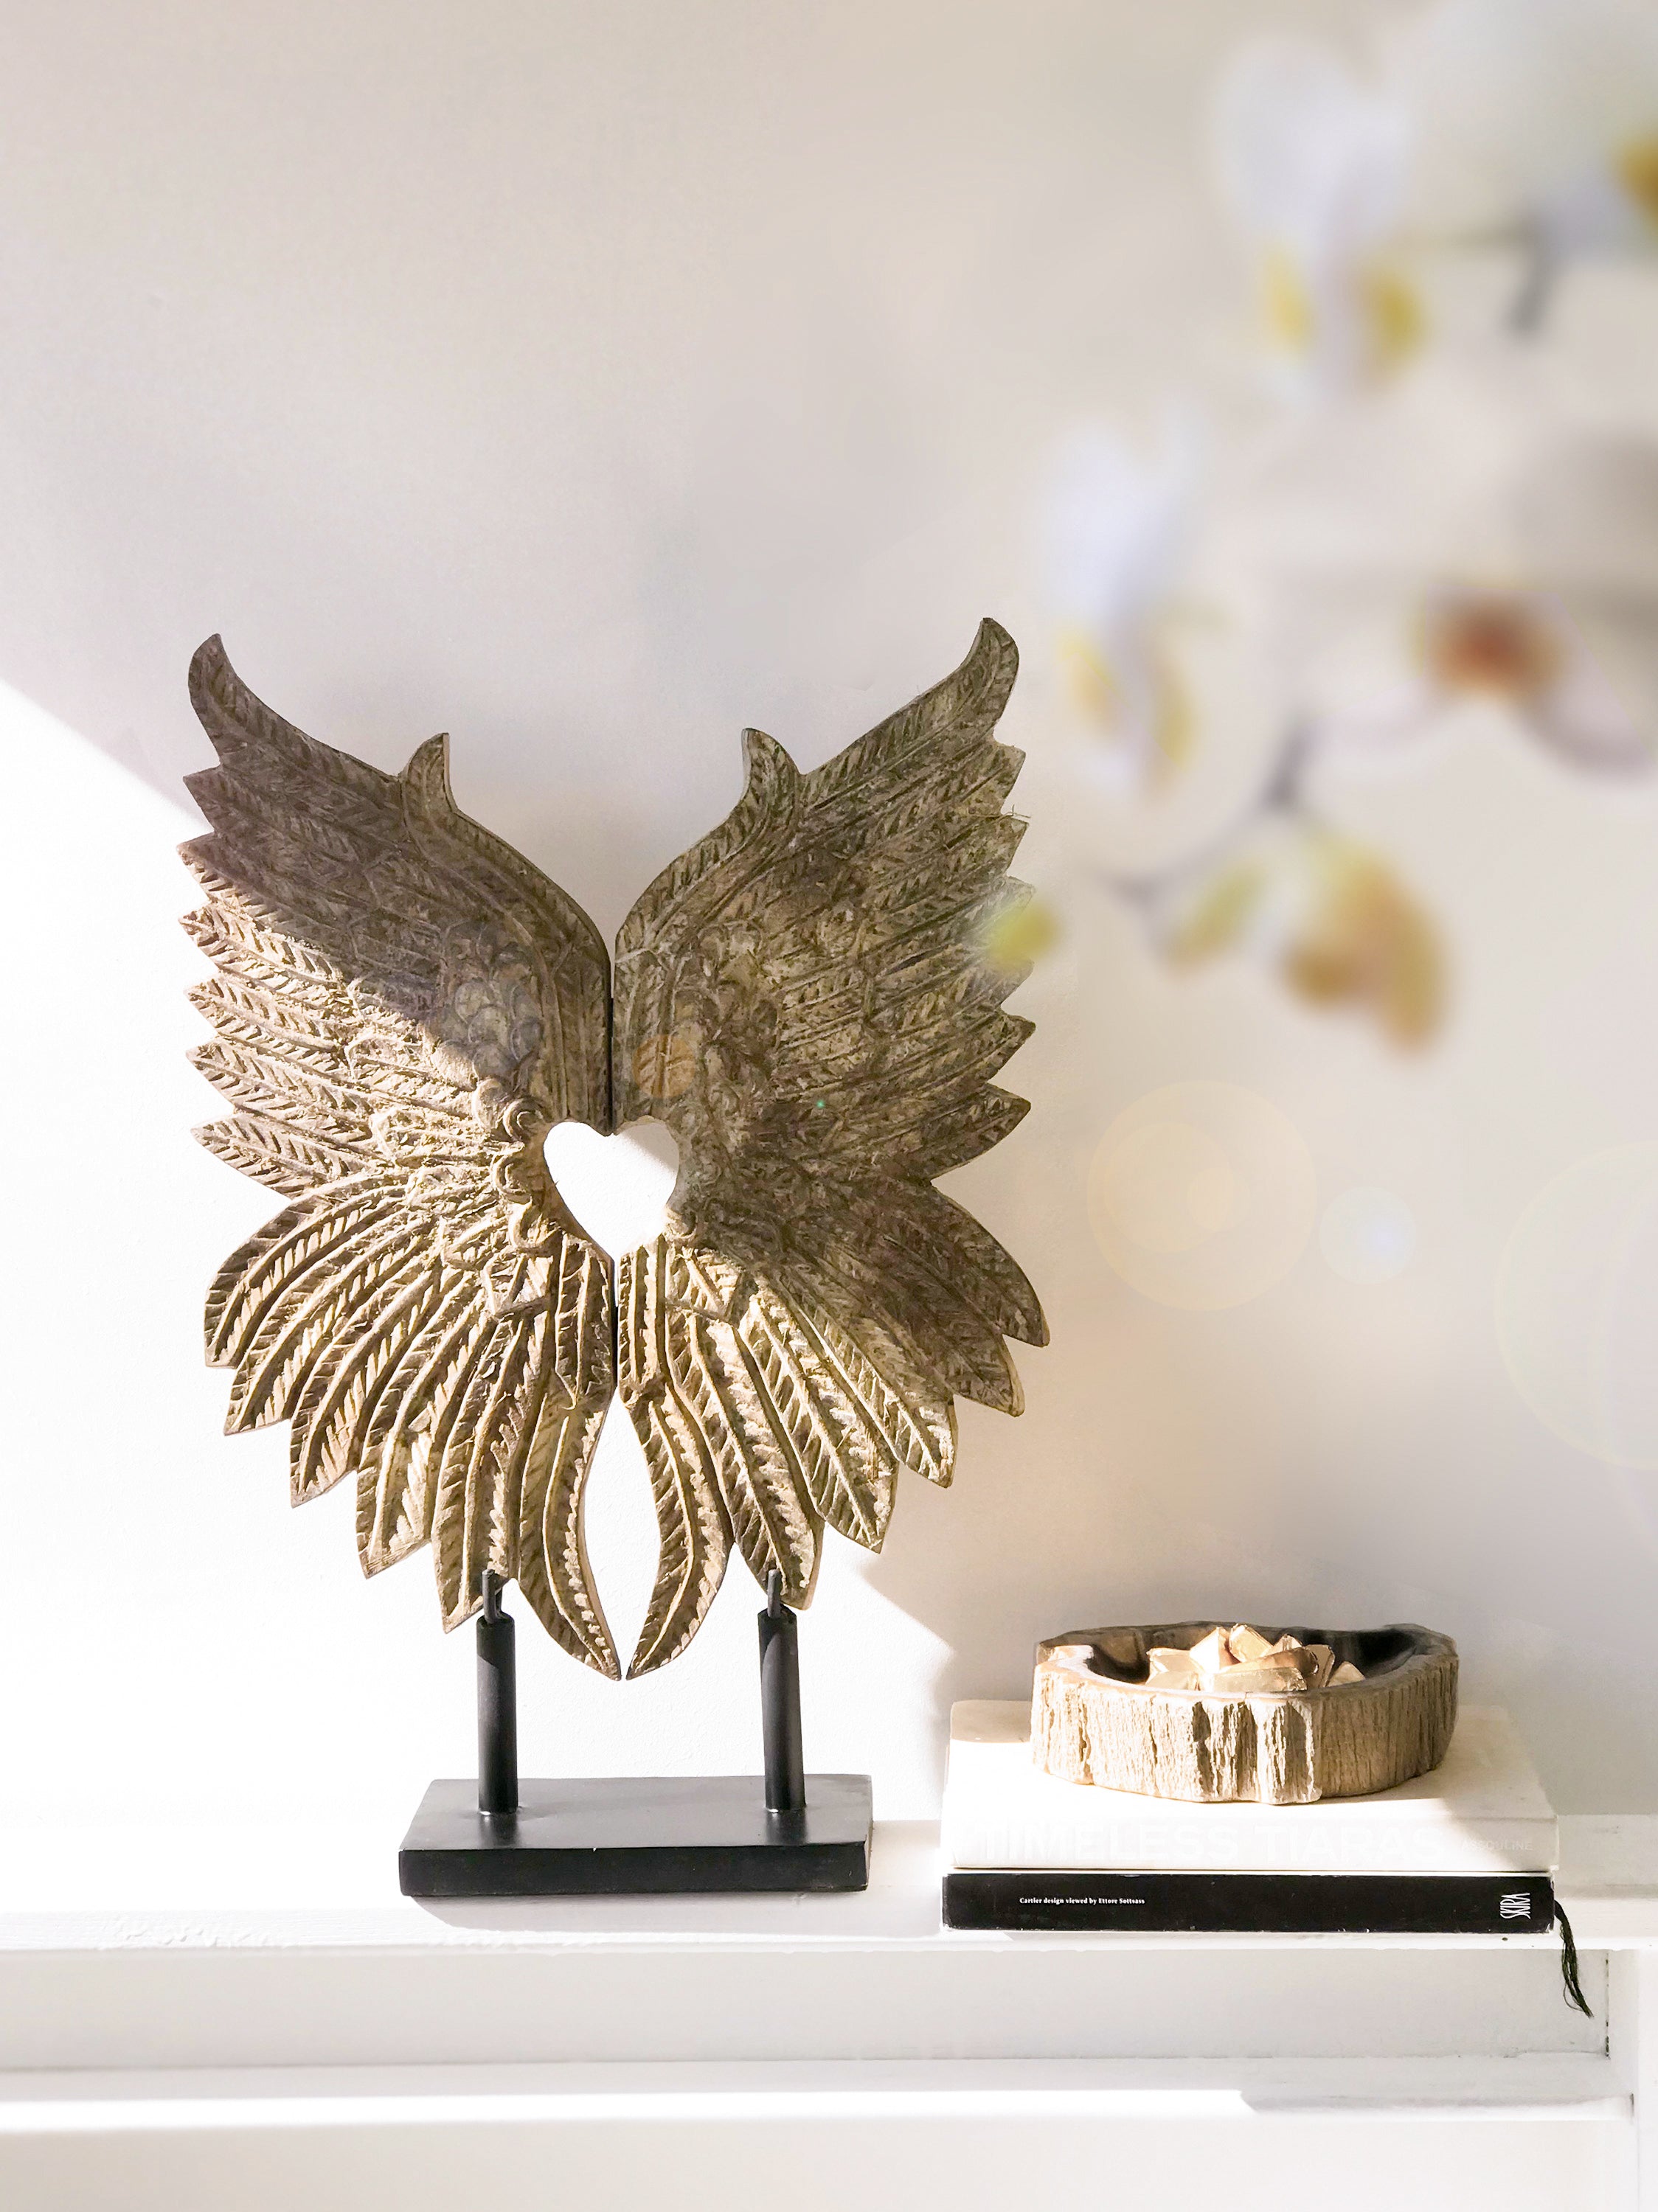 Garuda's wings from Java